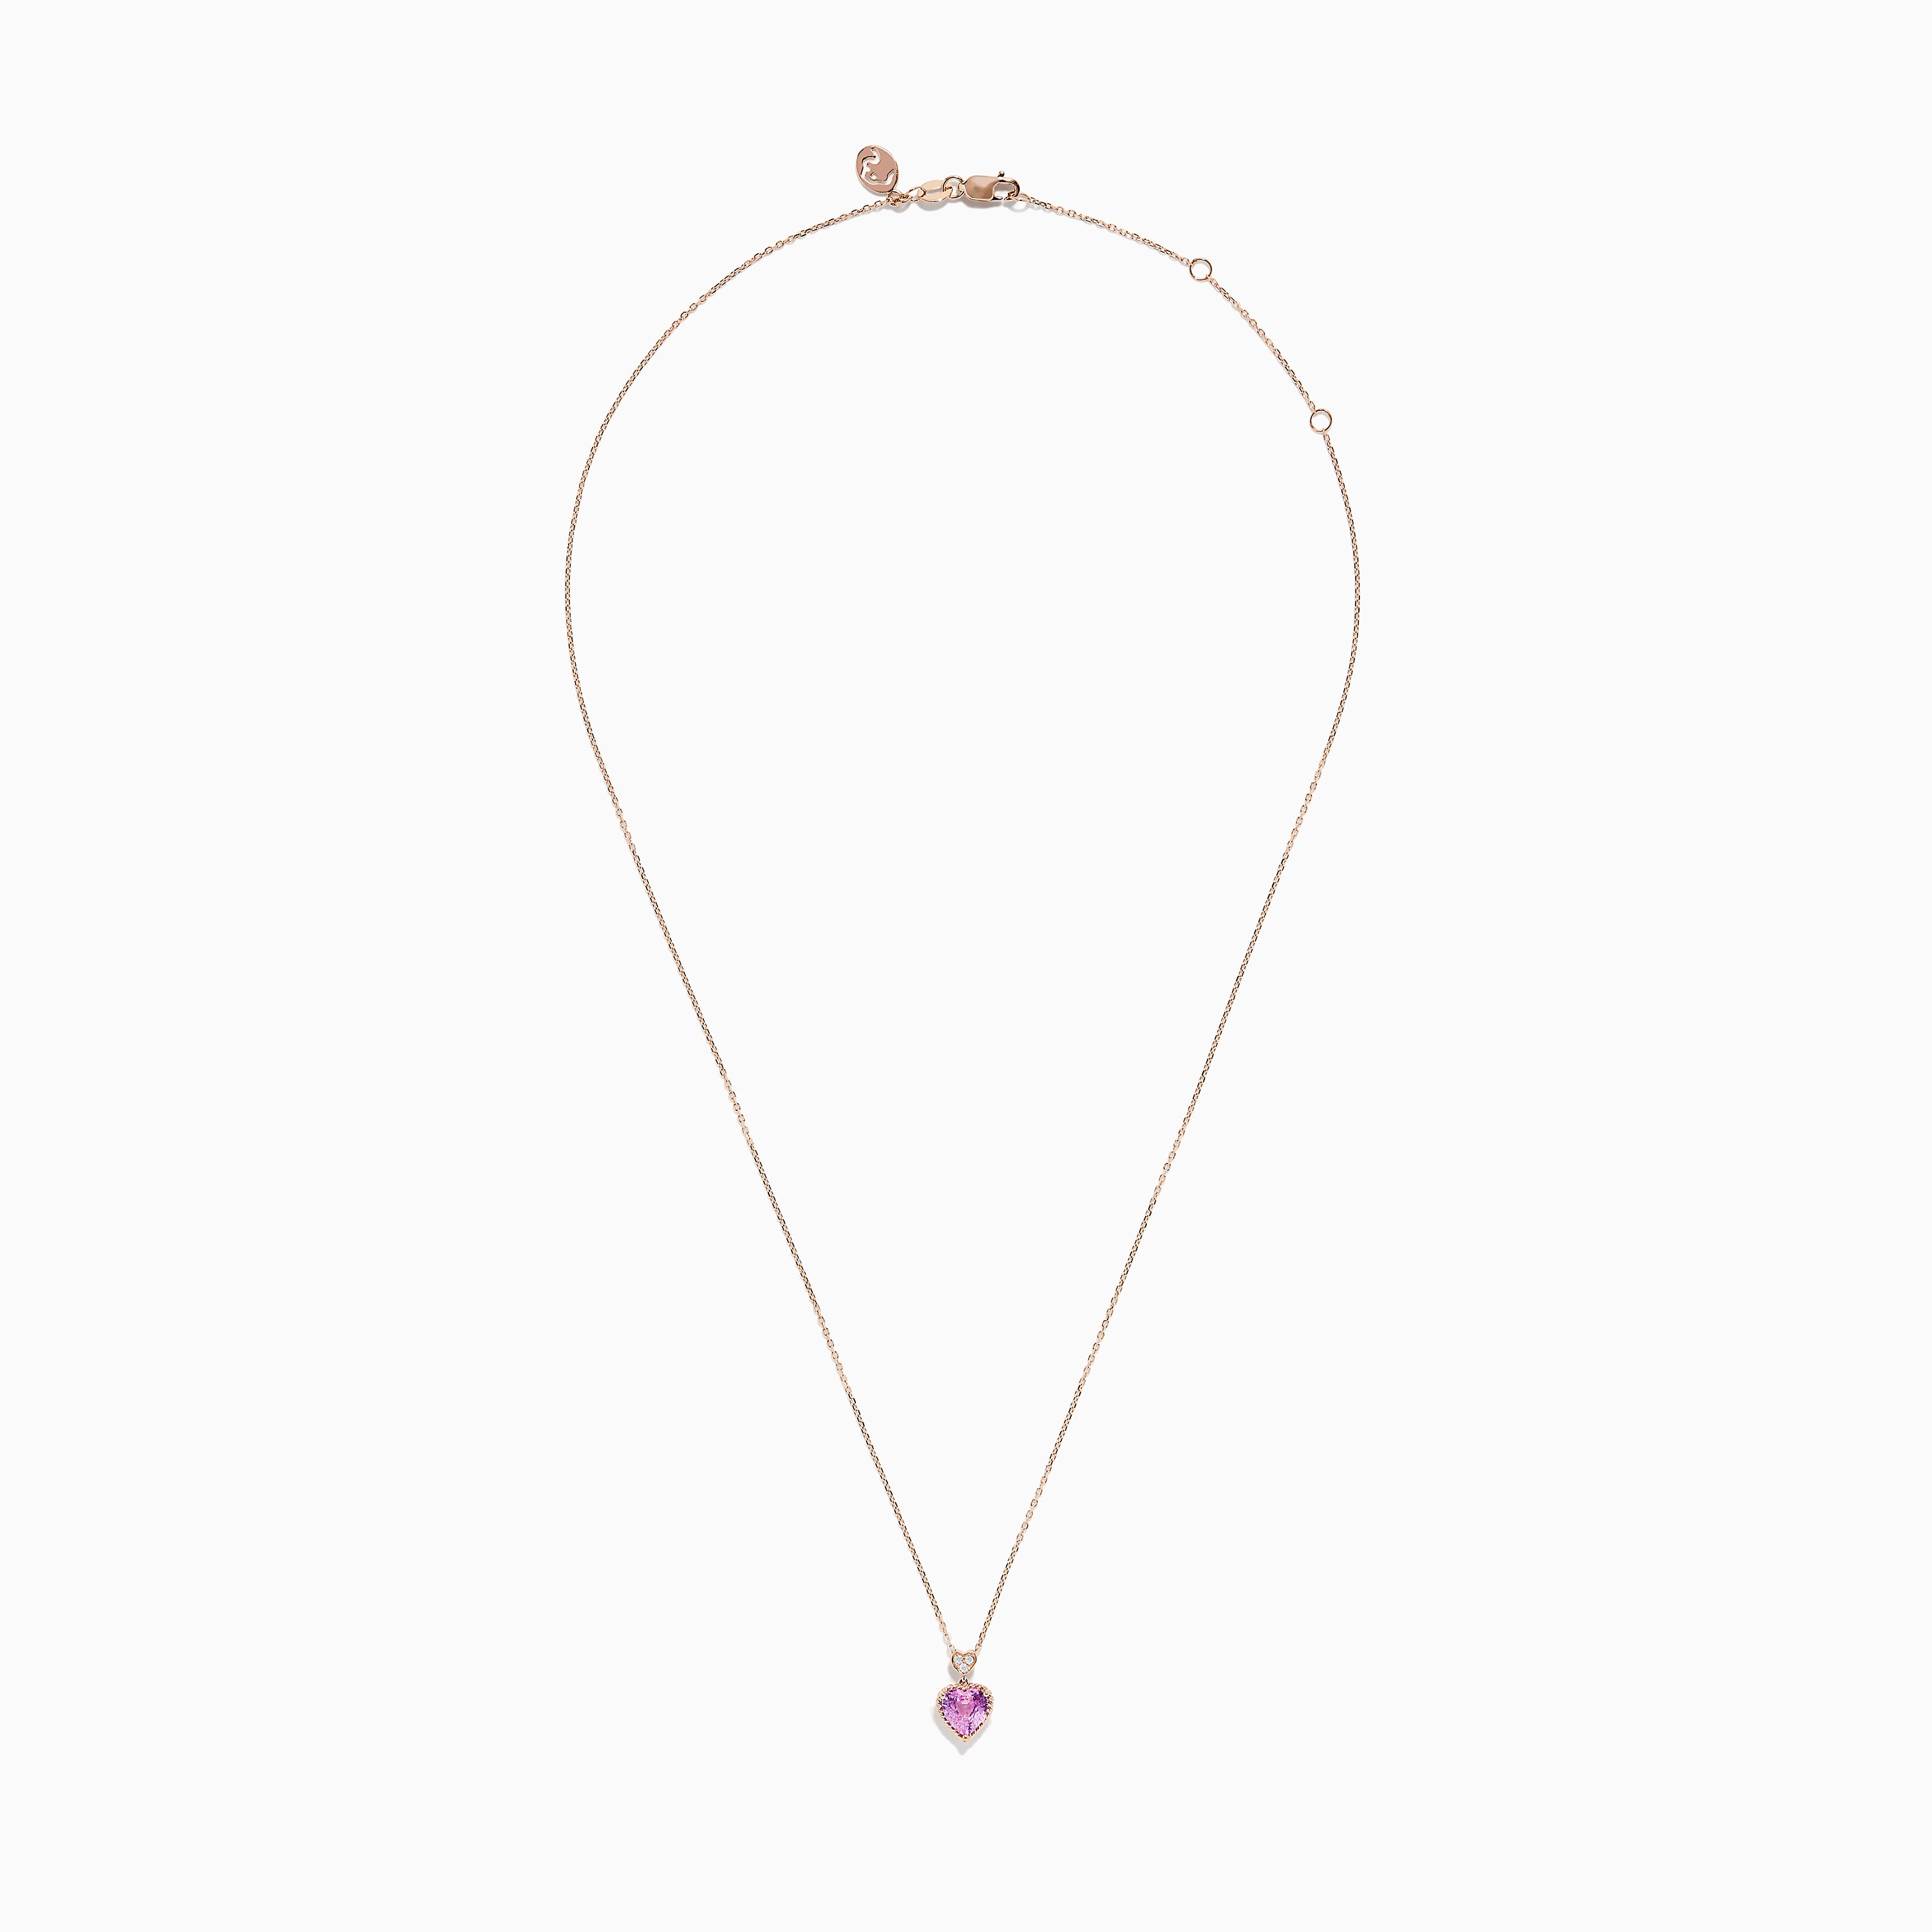 32ct Fancy Intense Pink Bare Diamond 14k Rose Gold Necklace